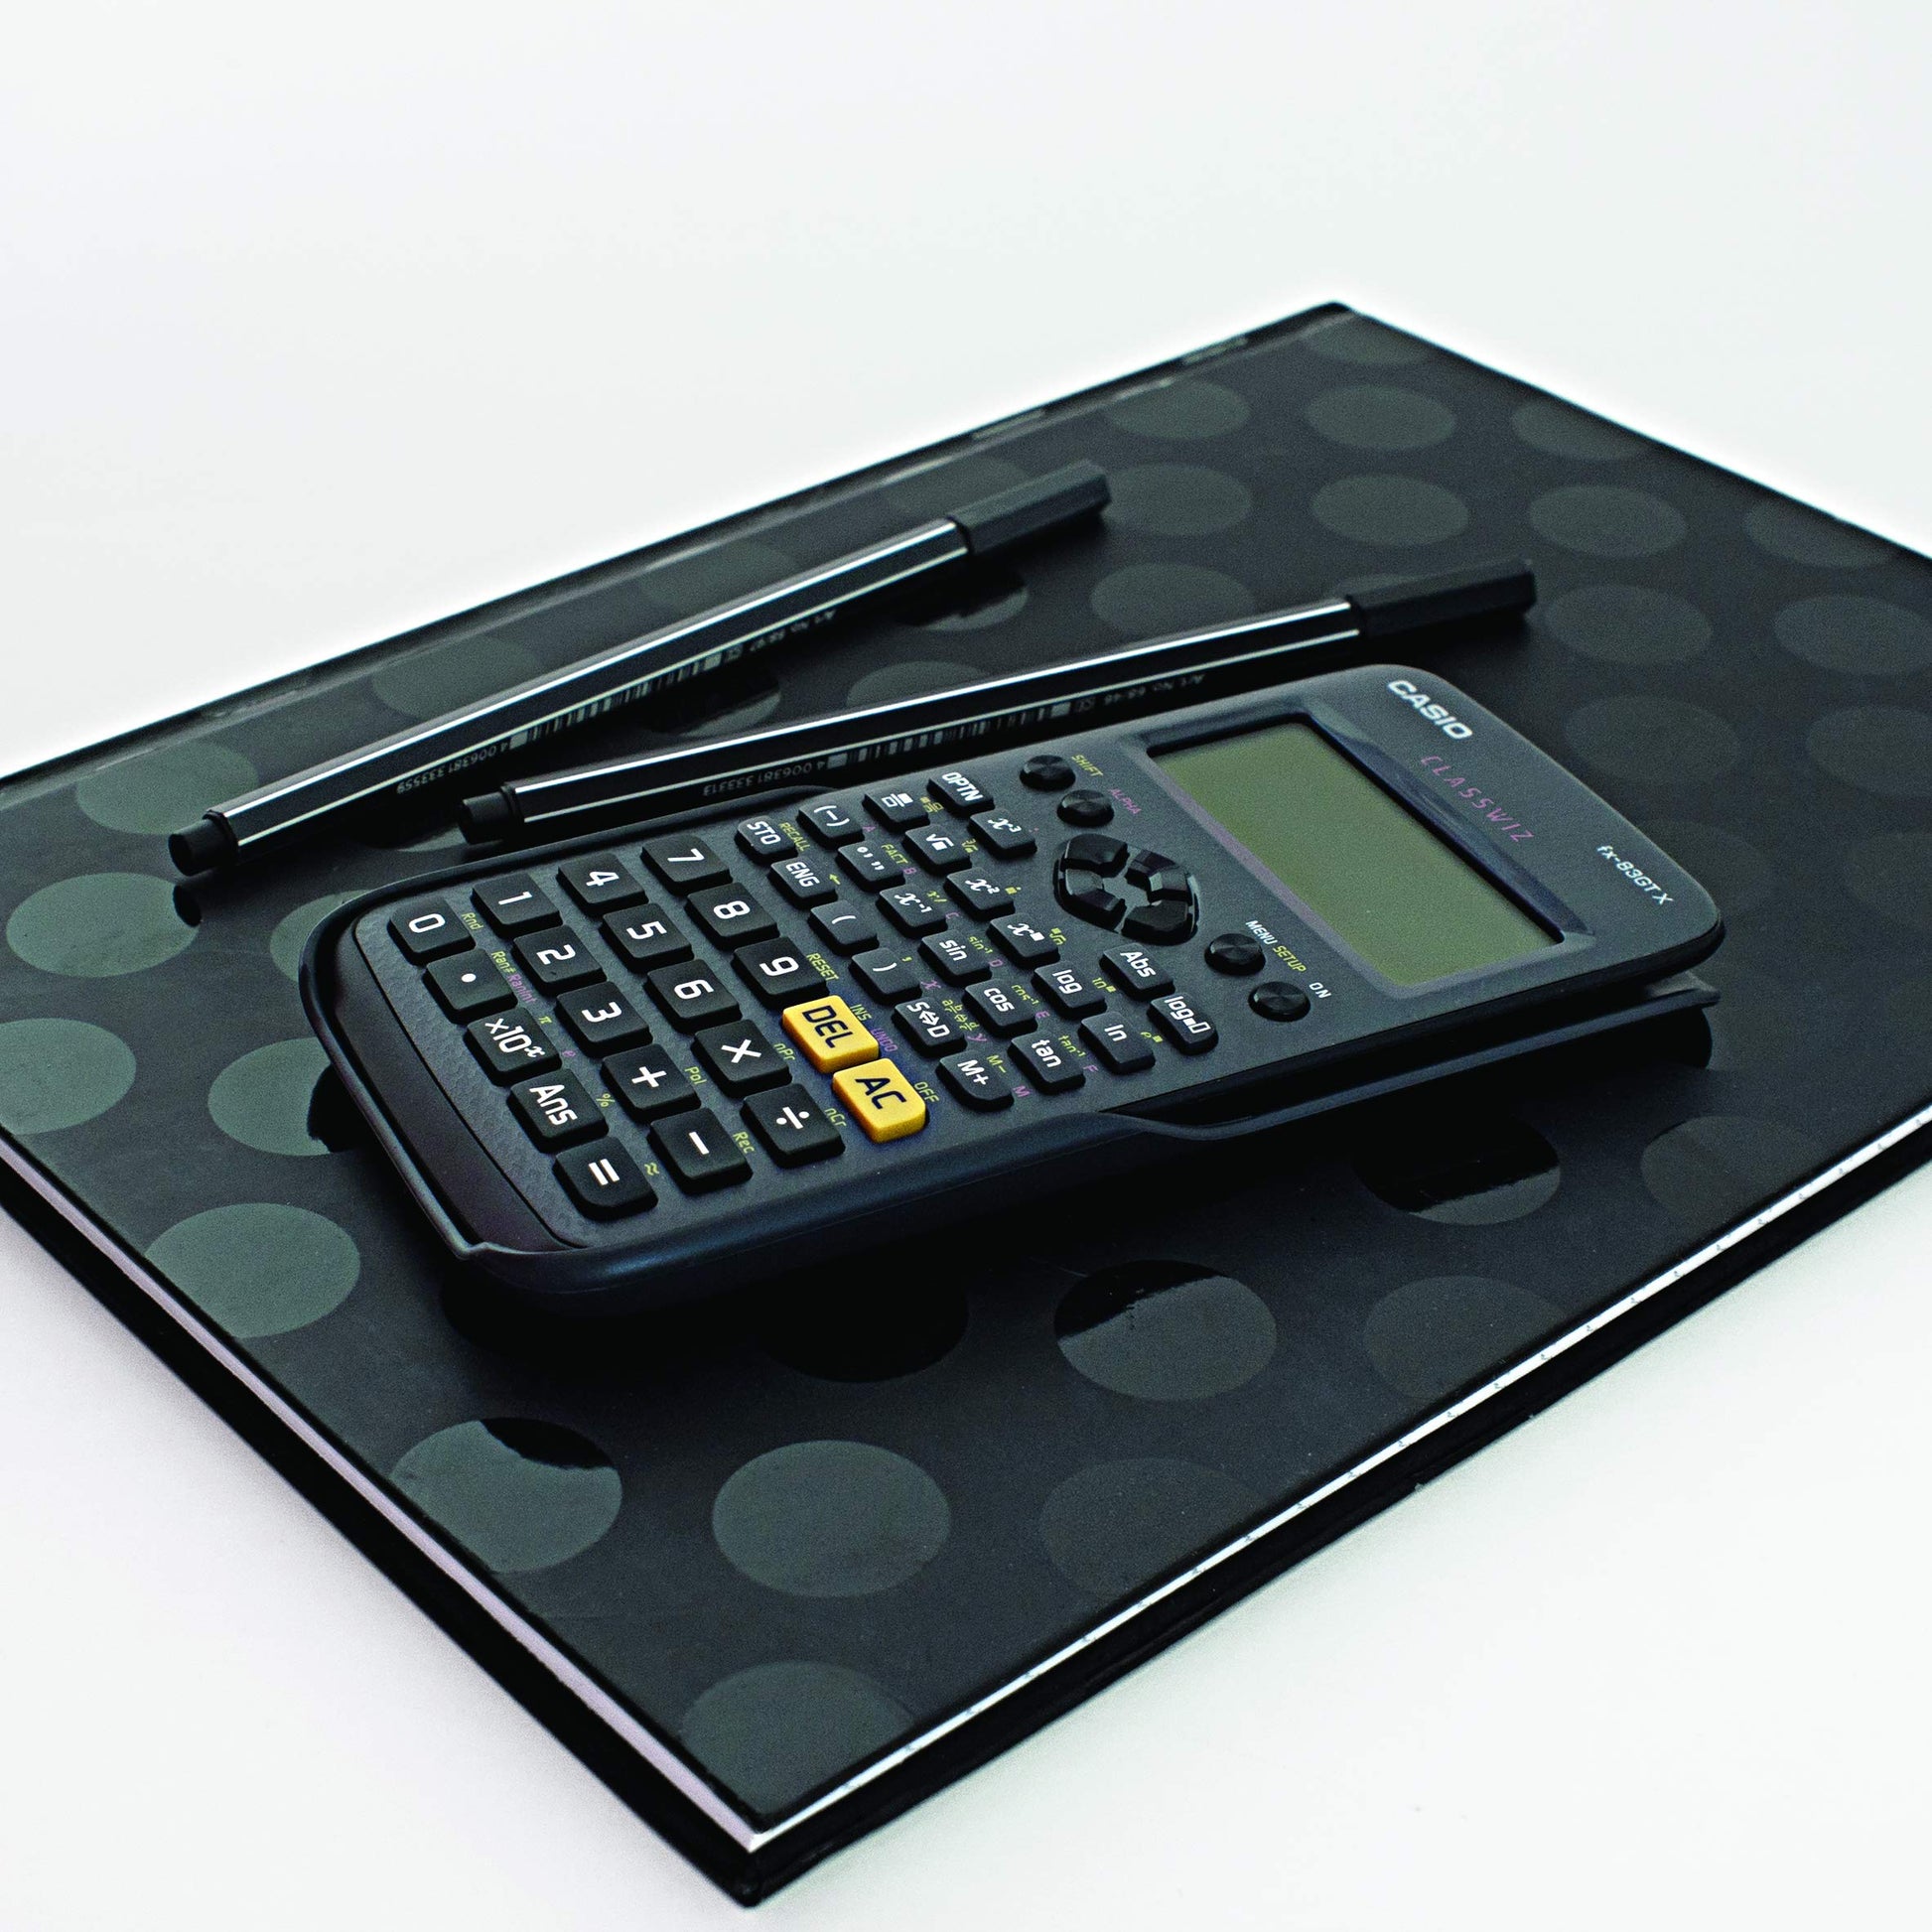 Casio FX-83GTX Scientific Calculator, Black